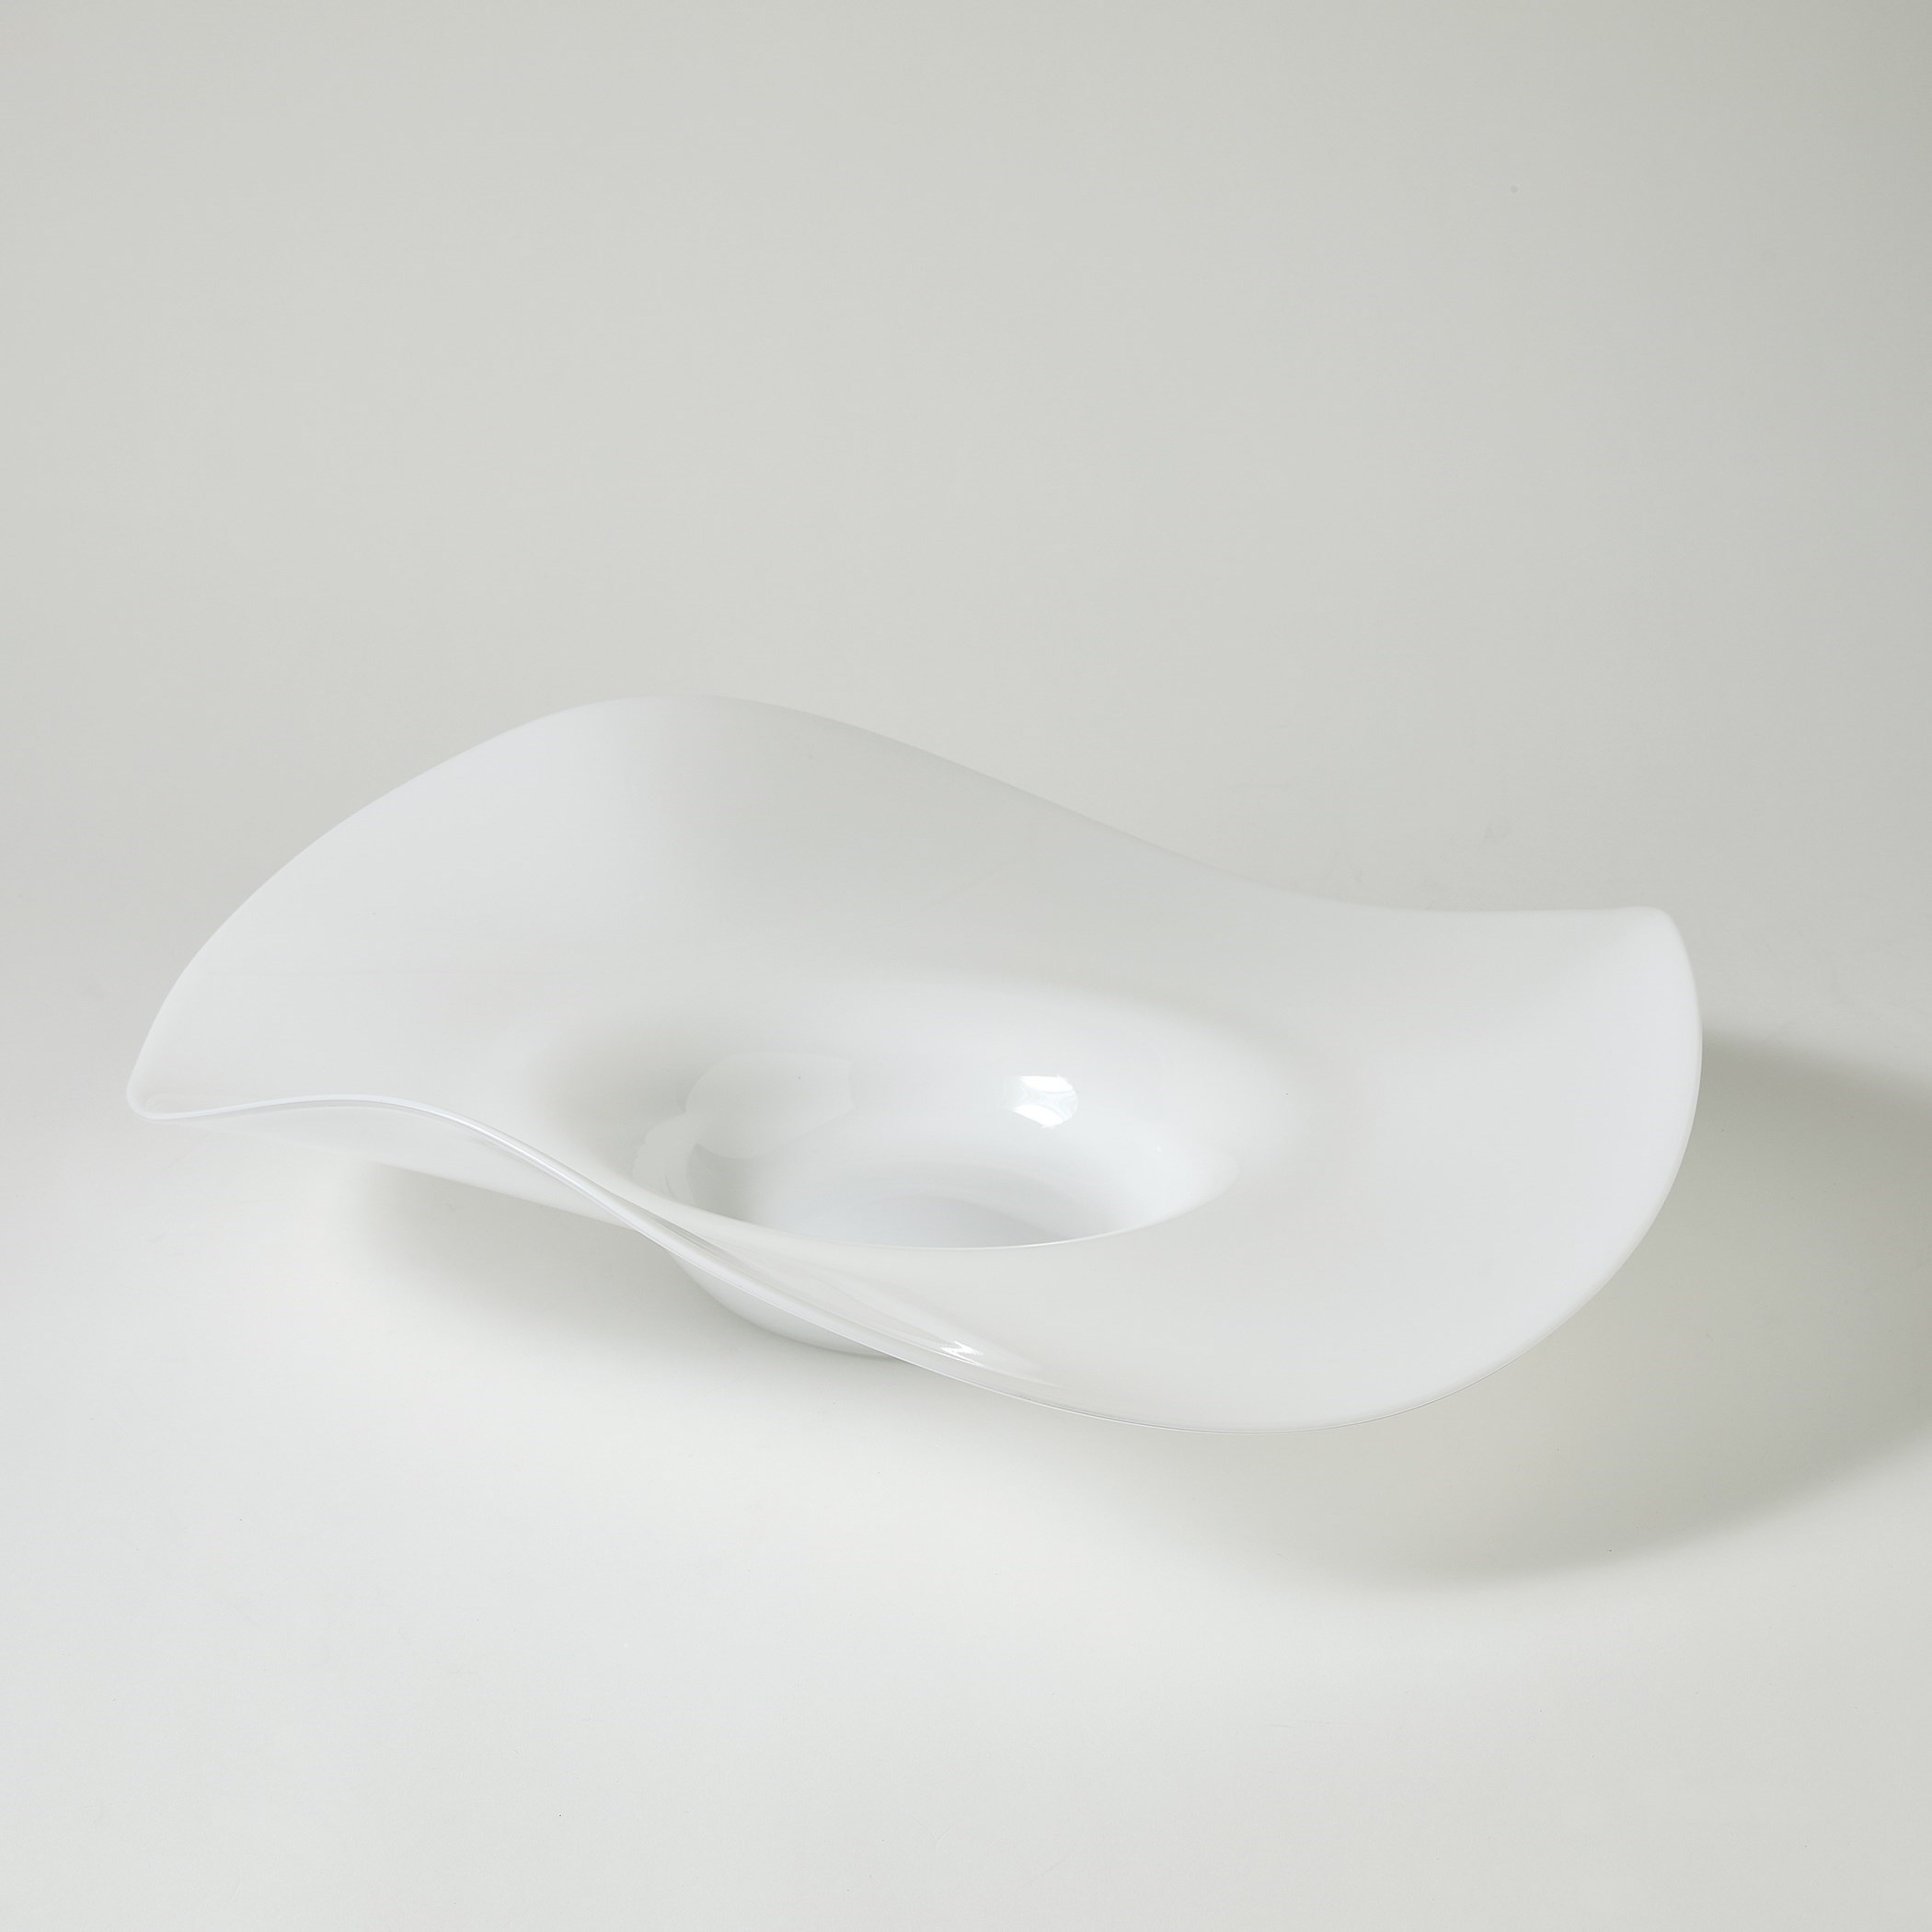 https://cdn.1stopbedrooms.com/media/catalog/product/w/a/wavy-edge-bowl-in-white_qb13444679_5.jpg